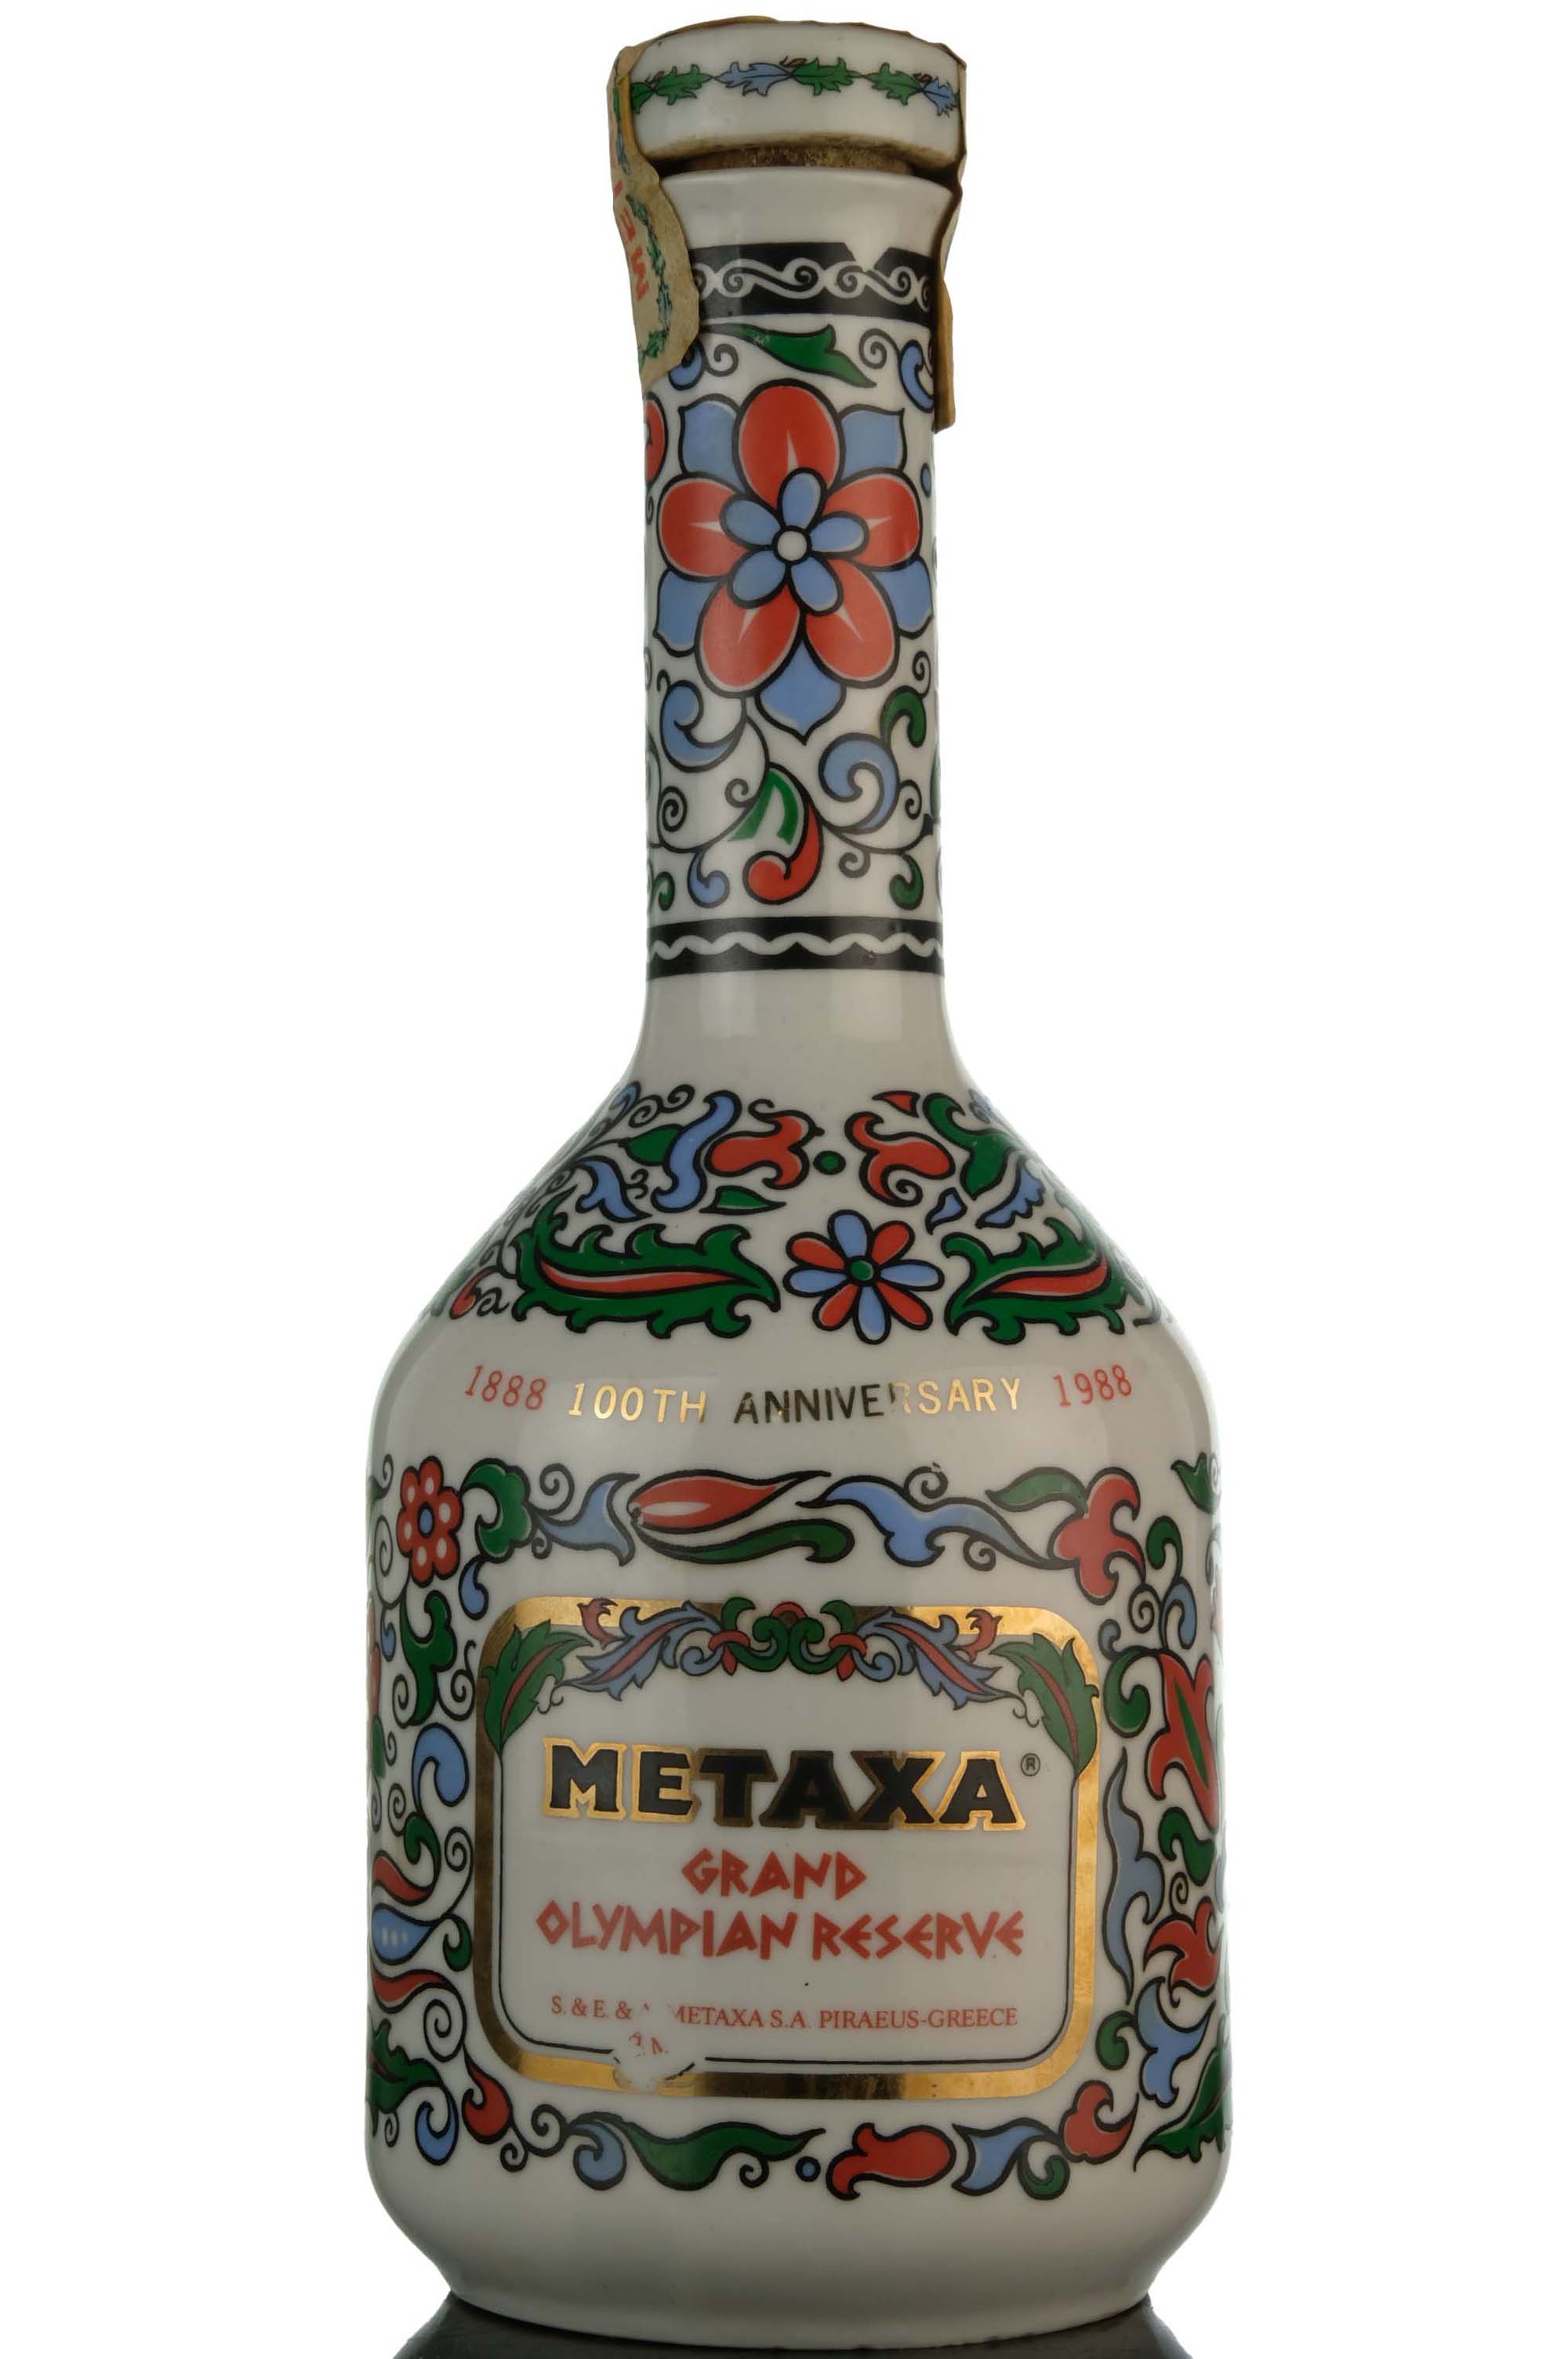 Metaxa Grand Olympian Reserve Greek Brandy - Ceramic